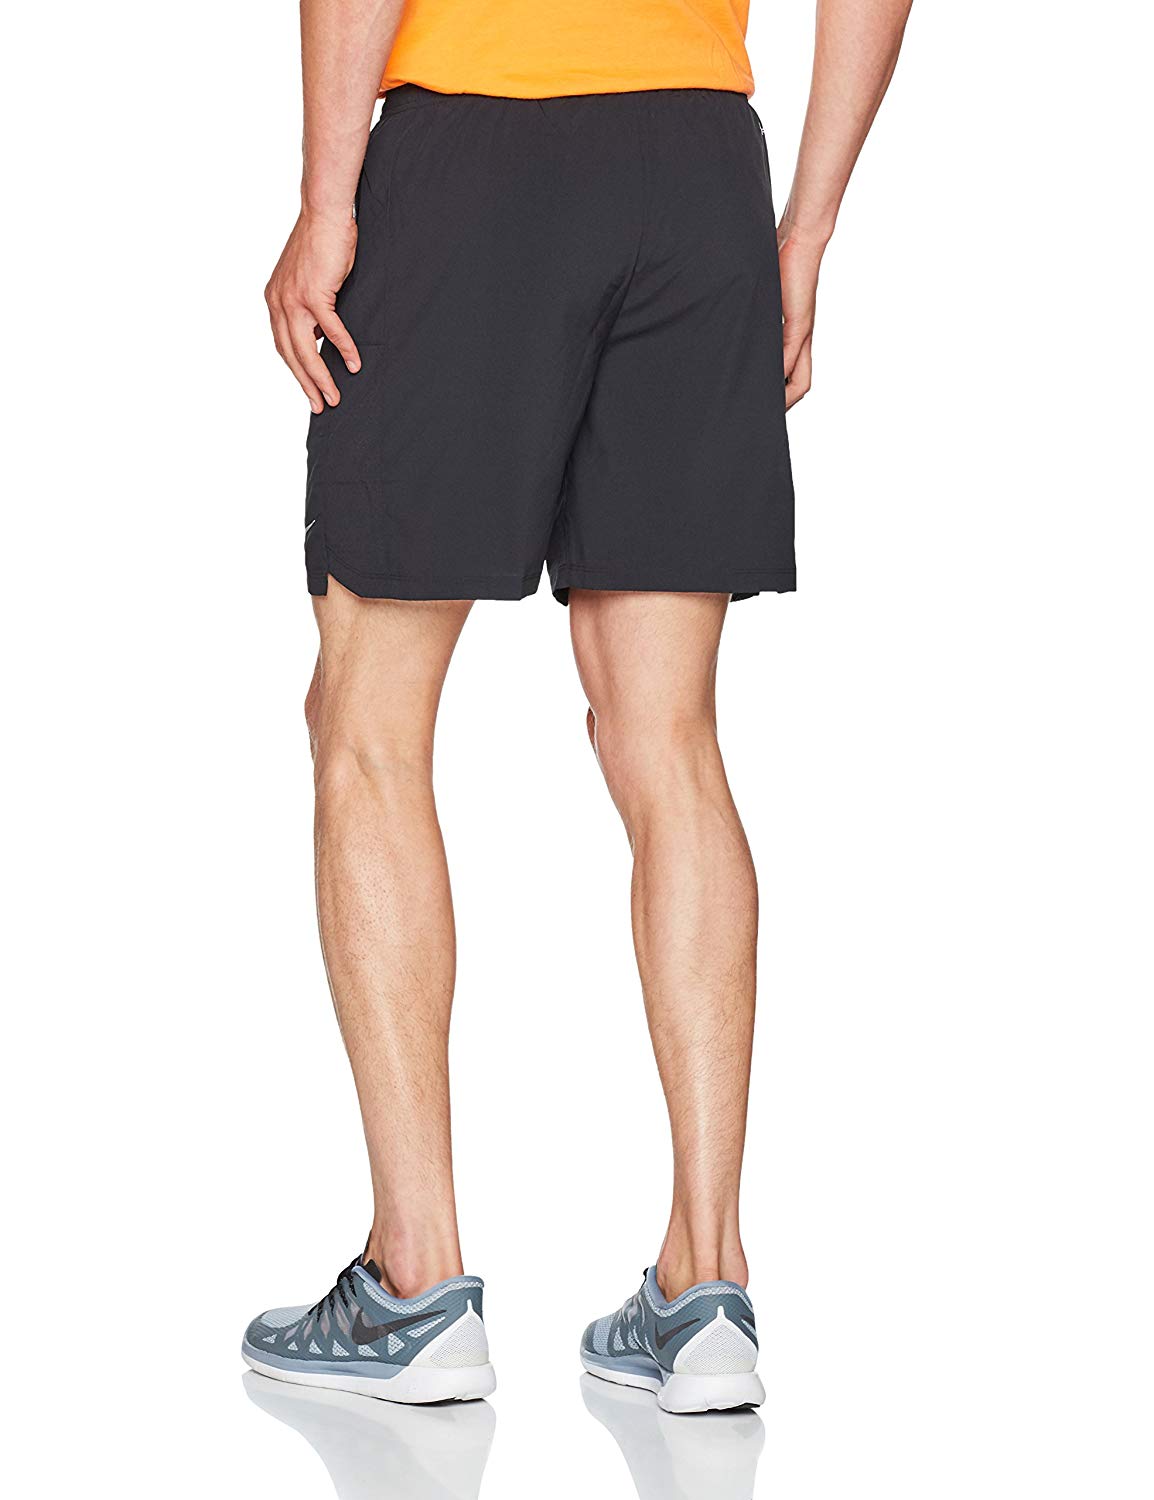 Buy Nike Black Polyester Shorts for Men Online @ ₹999 from ShopClues